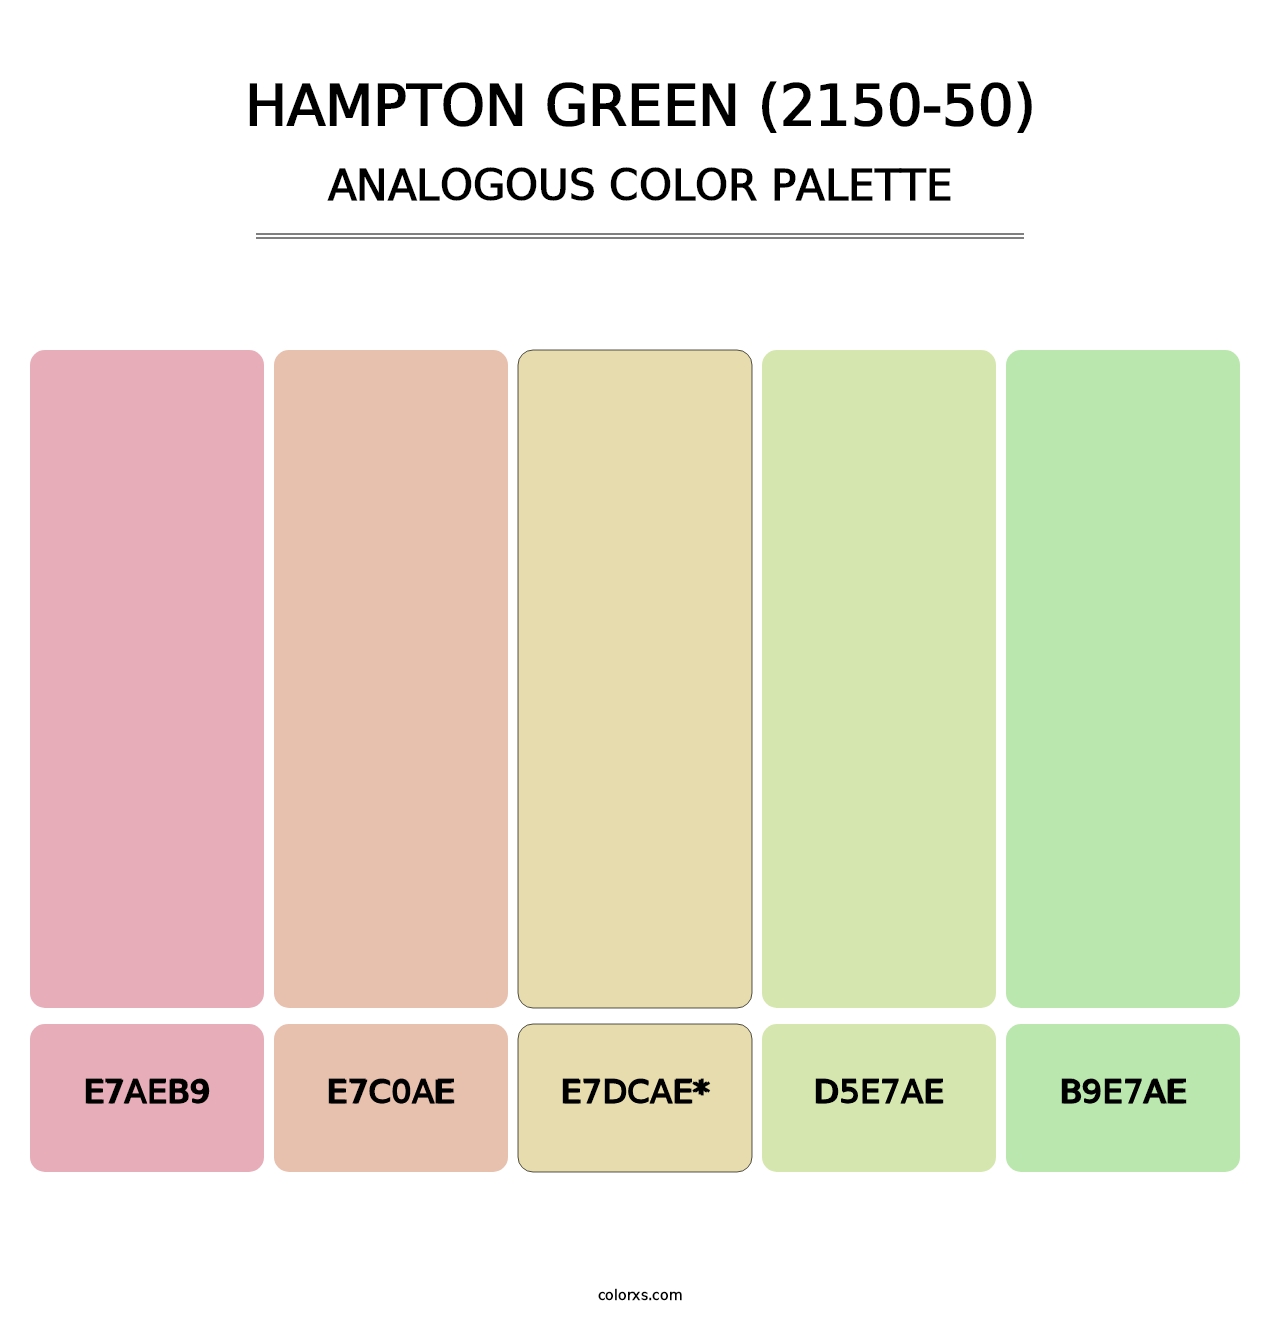 Hampton Green (2150-50) - Analogous Color Palette